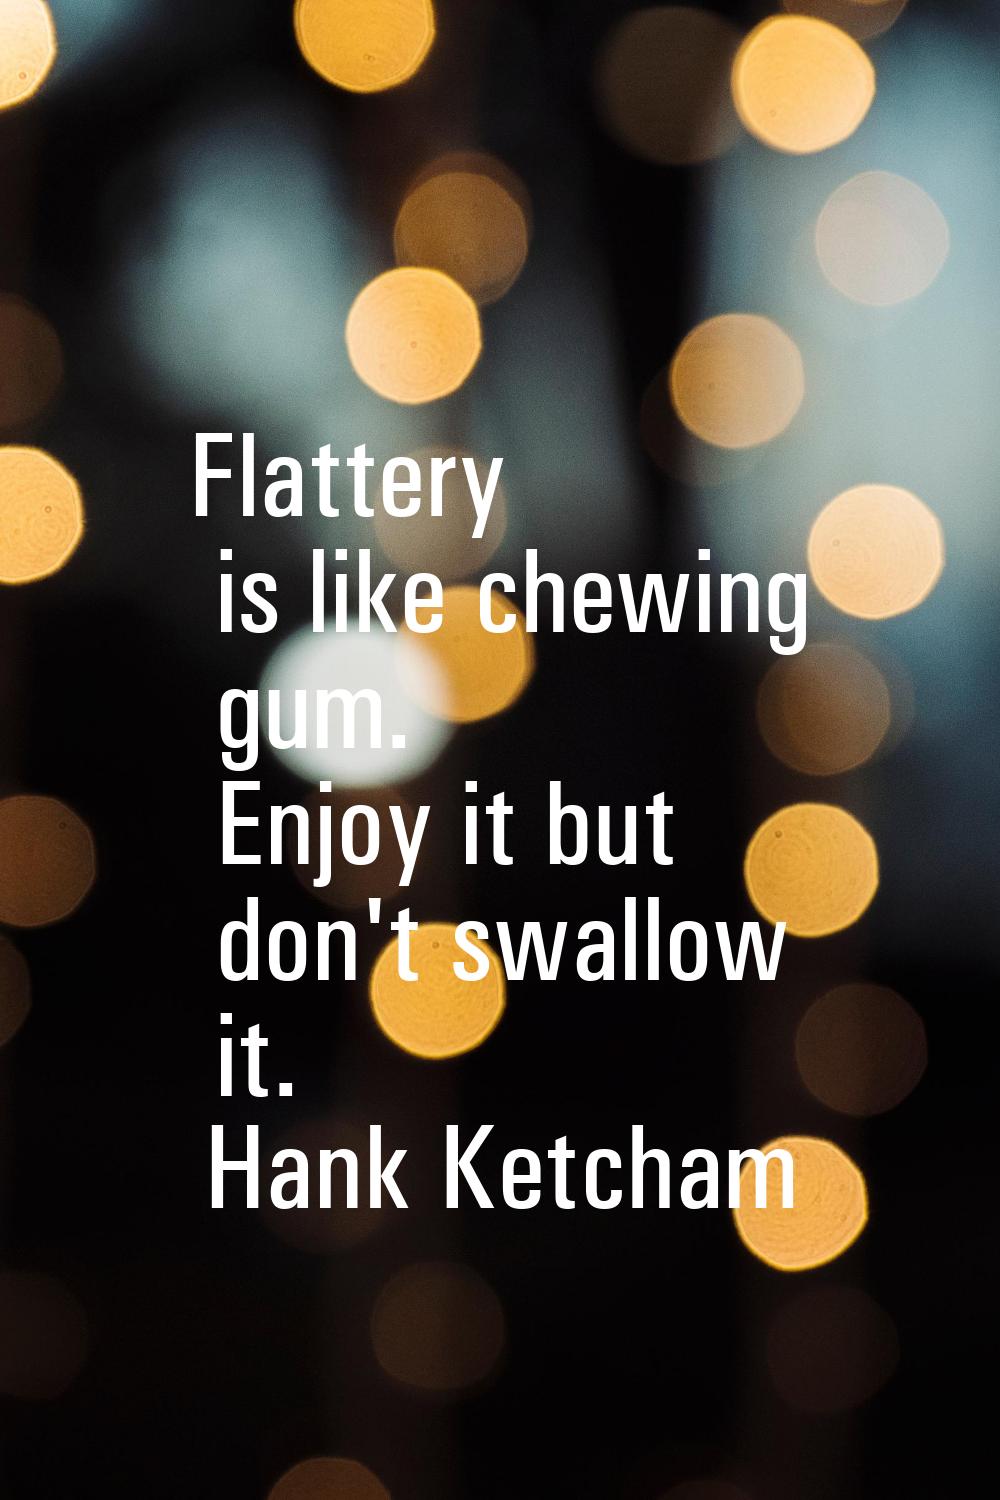 Flattery is like chewing gum. Enjoy it but don't swallow it.